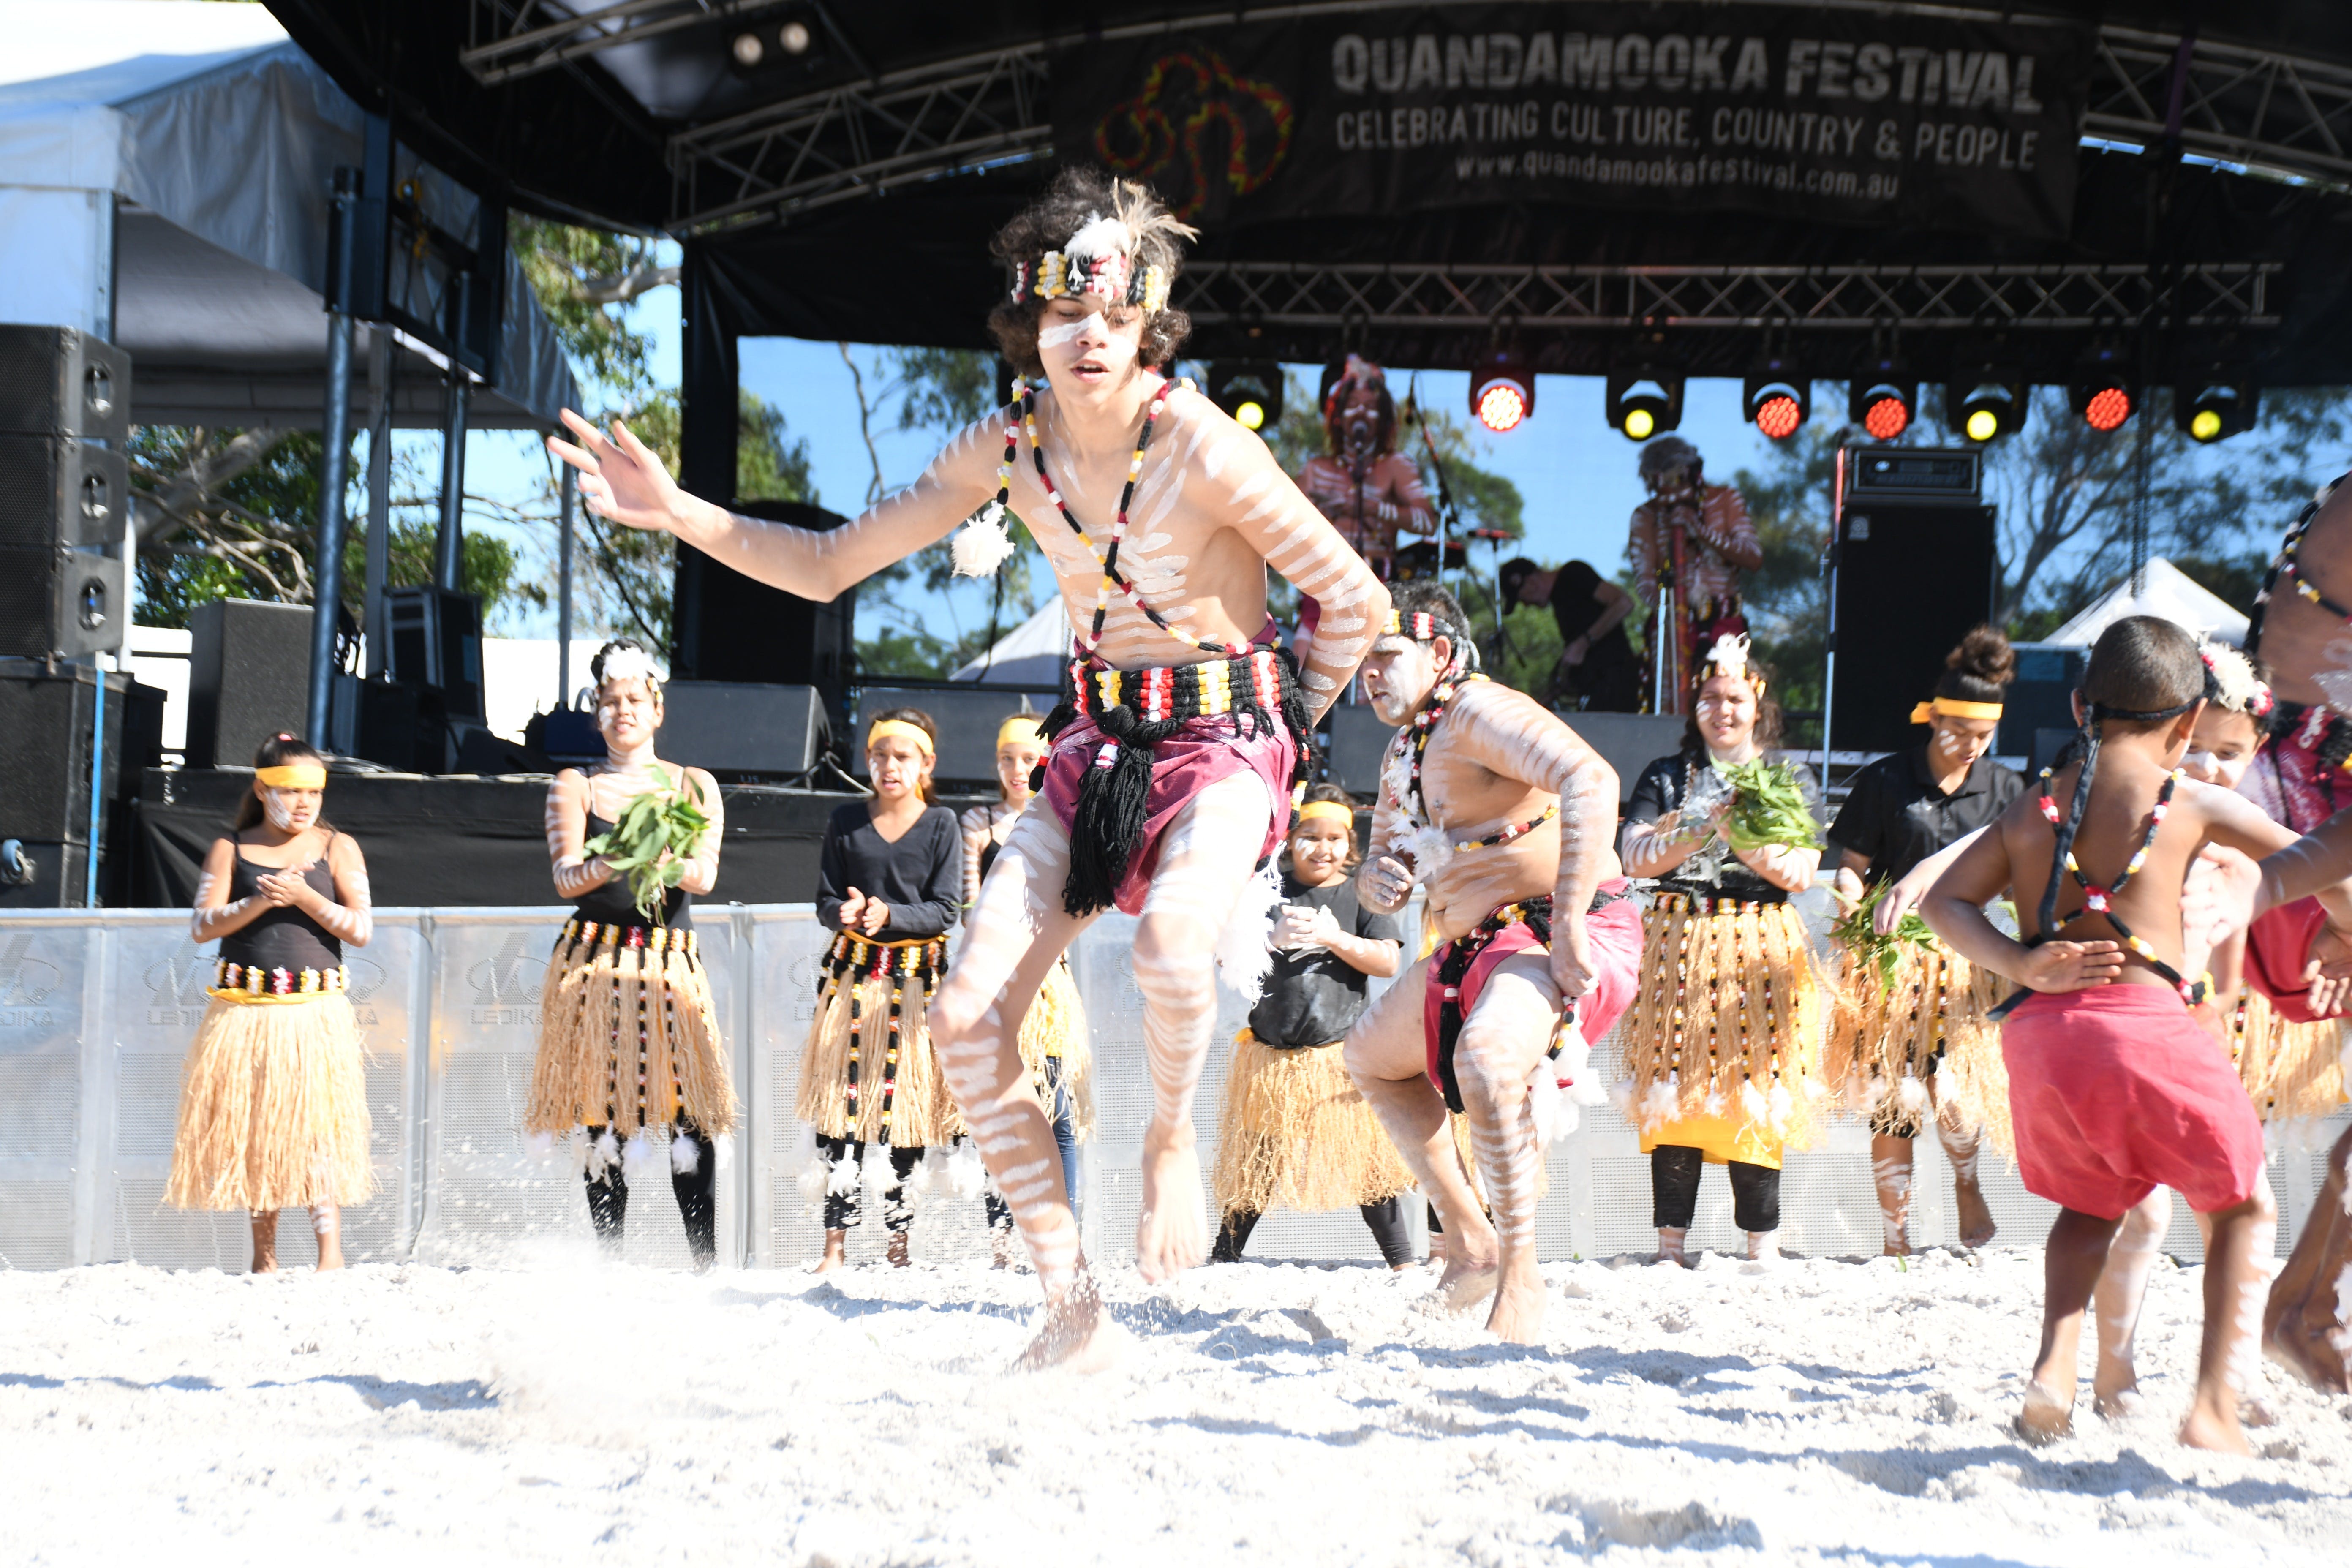 Quandamooka Festival 2021